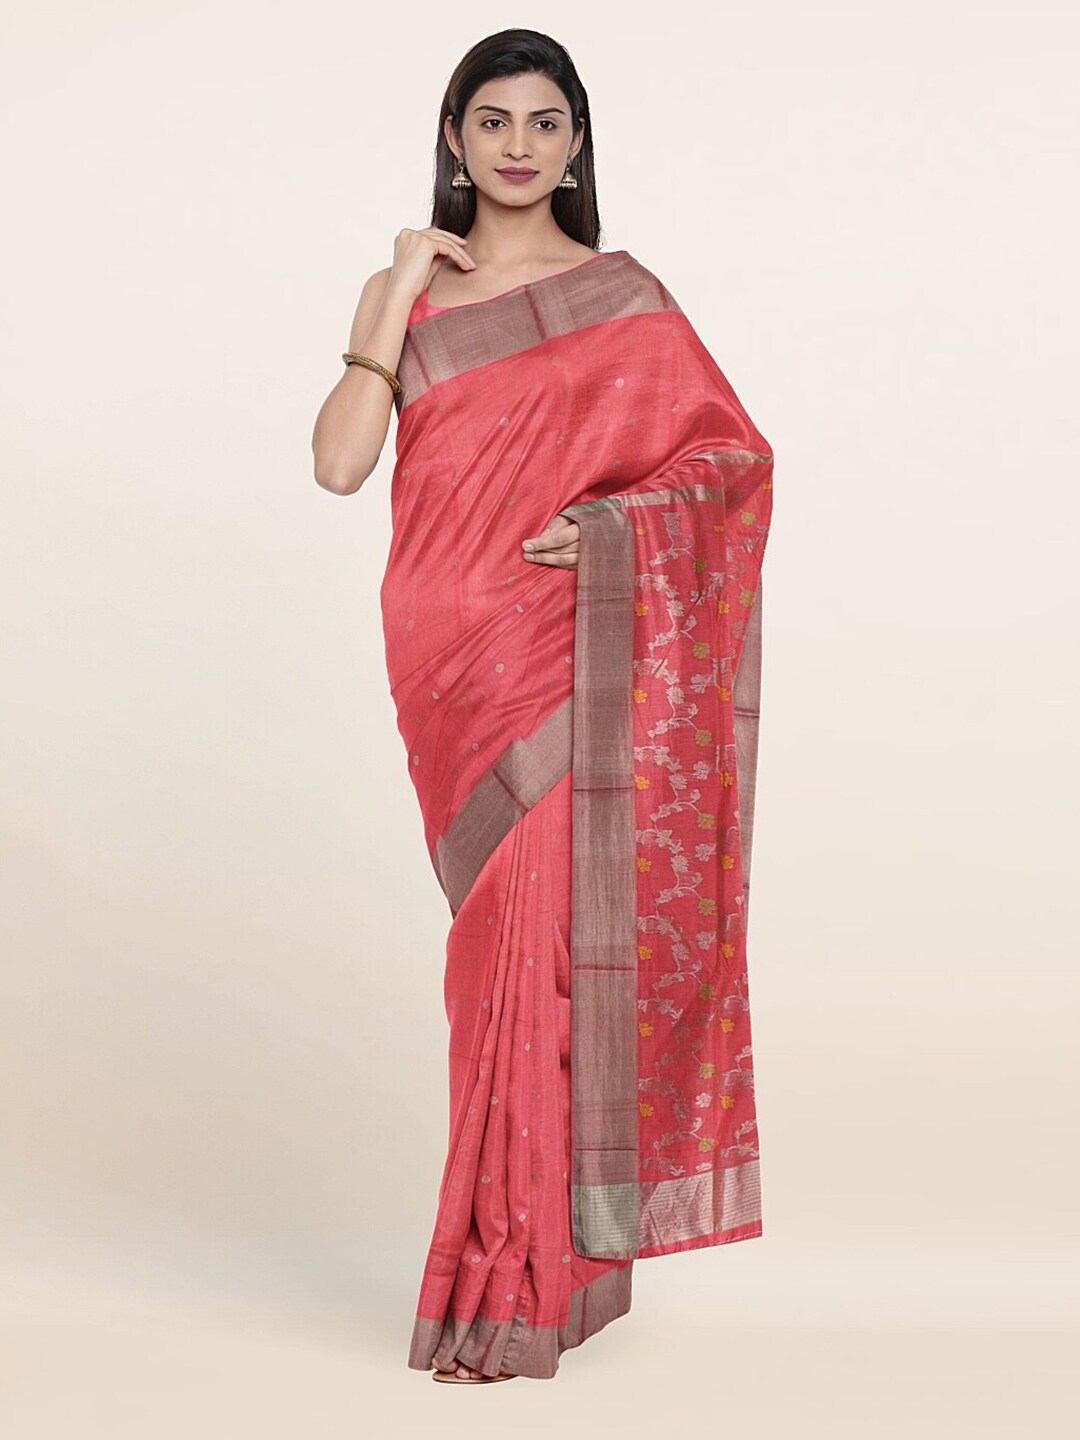 Pothys Pink & Silver-Toned Floral Zari Silk Cotton Saree Price in India